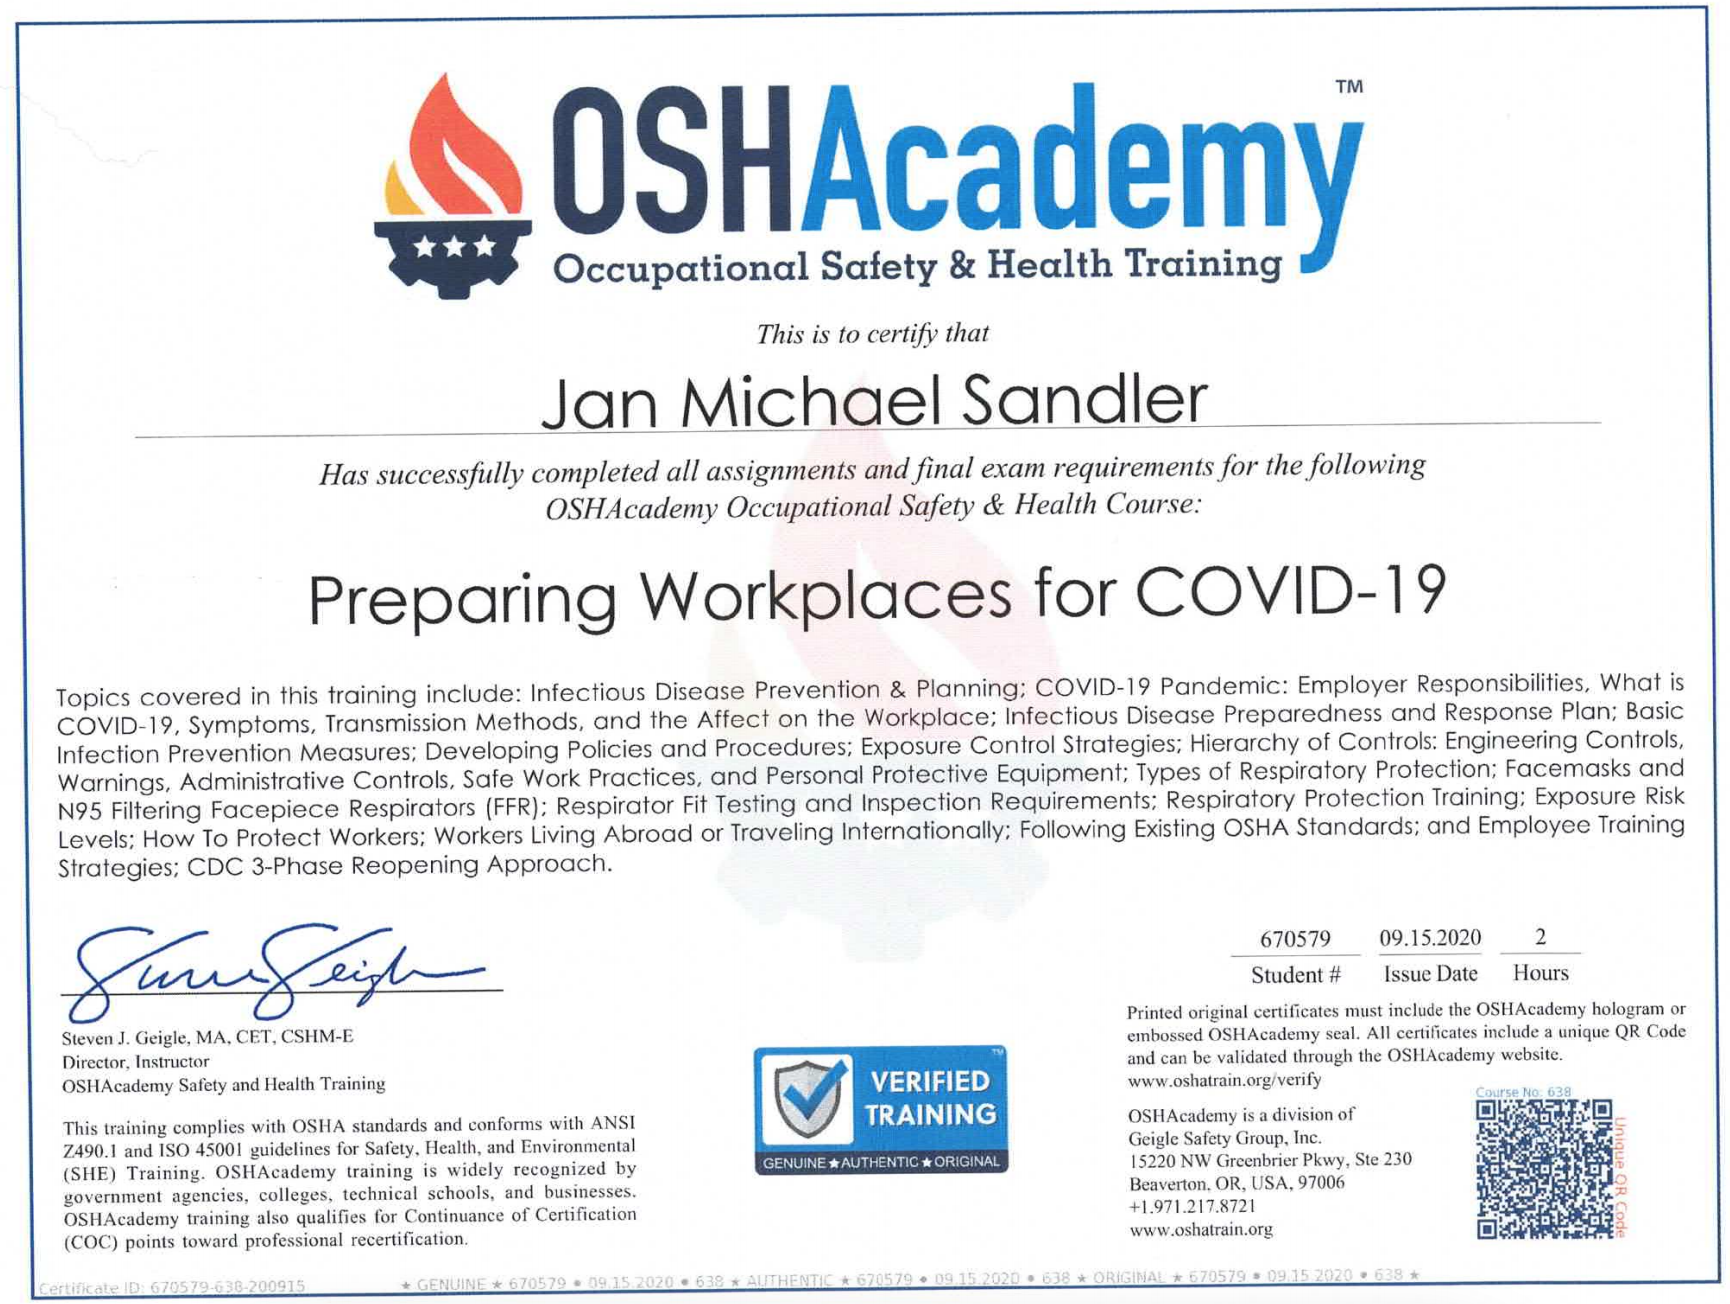 OHSAcademy Occupational Safety & Health Training